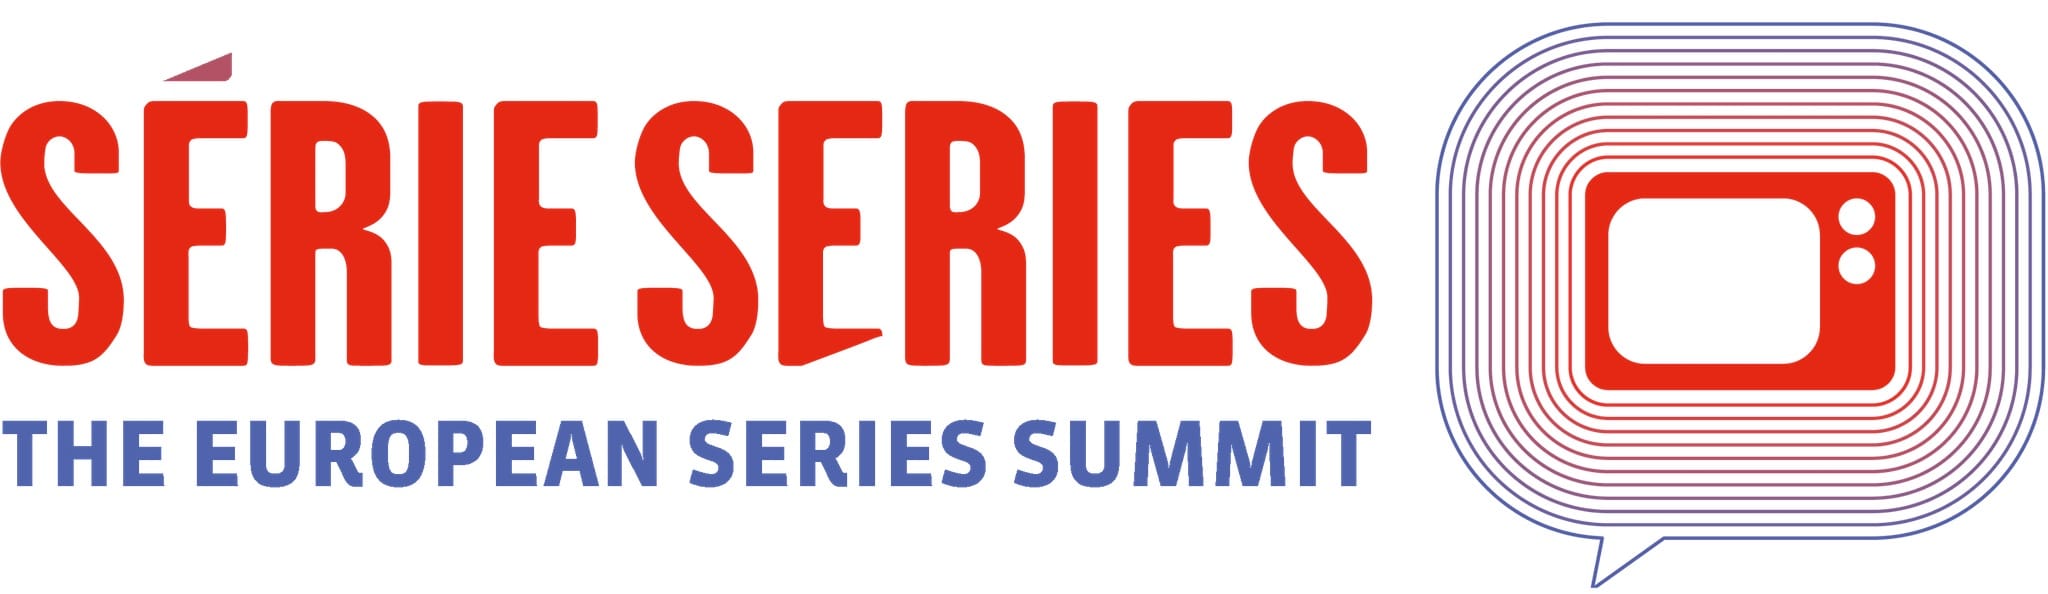 Série Series visuel logo festival